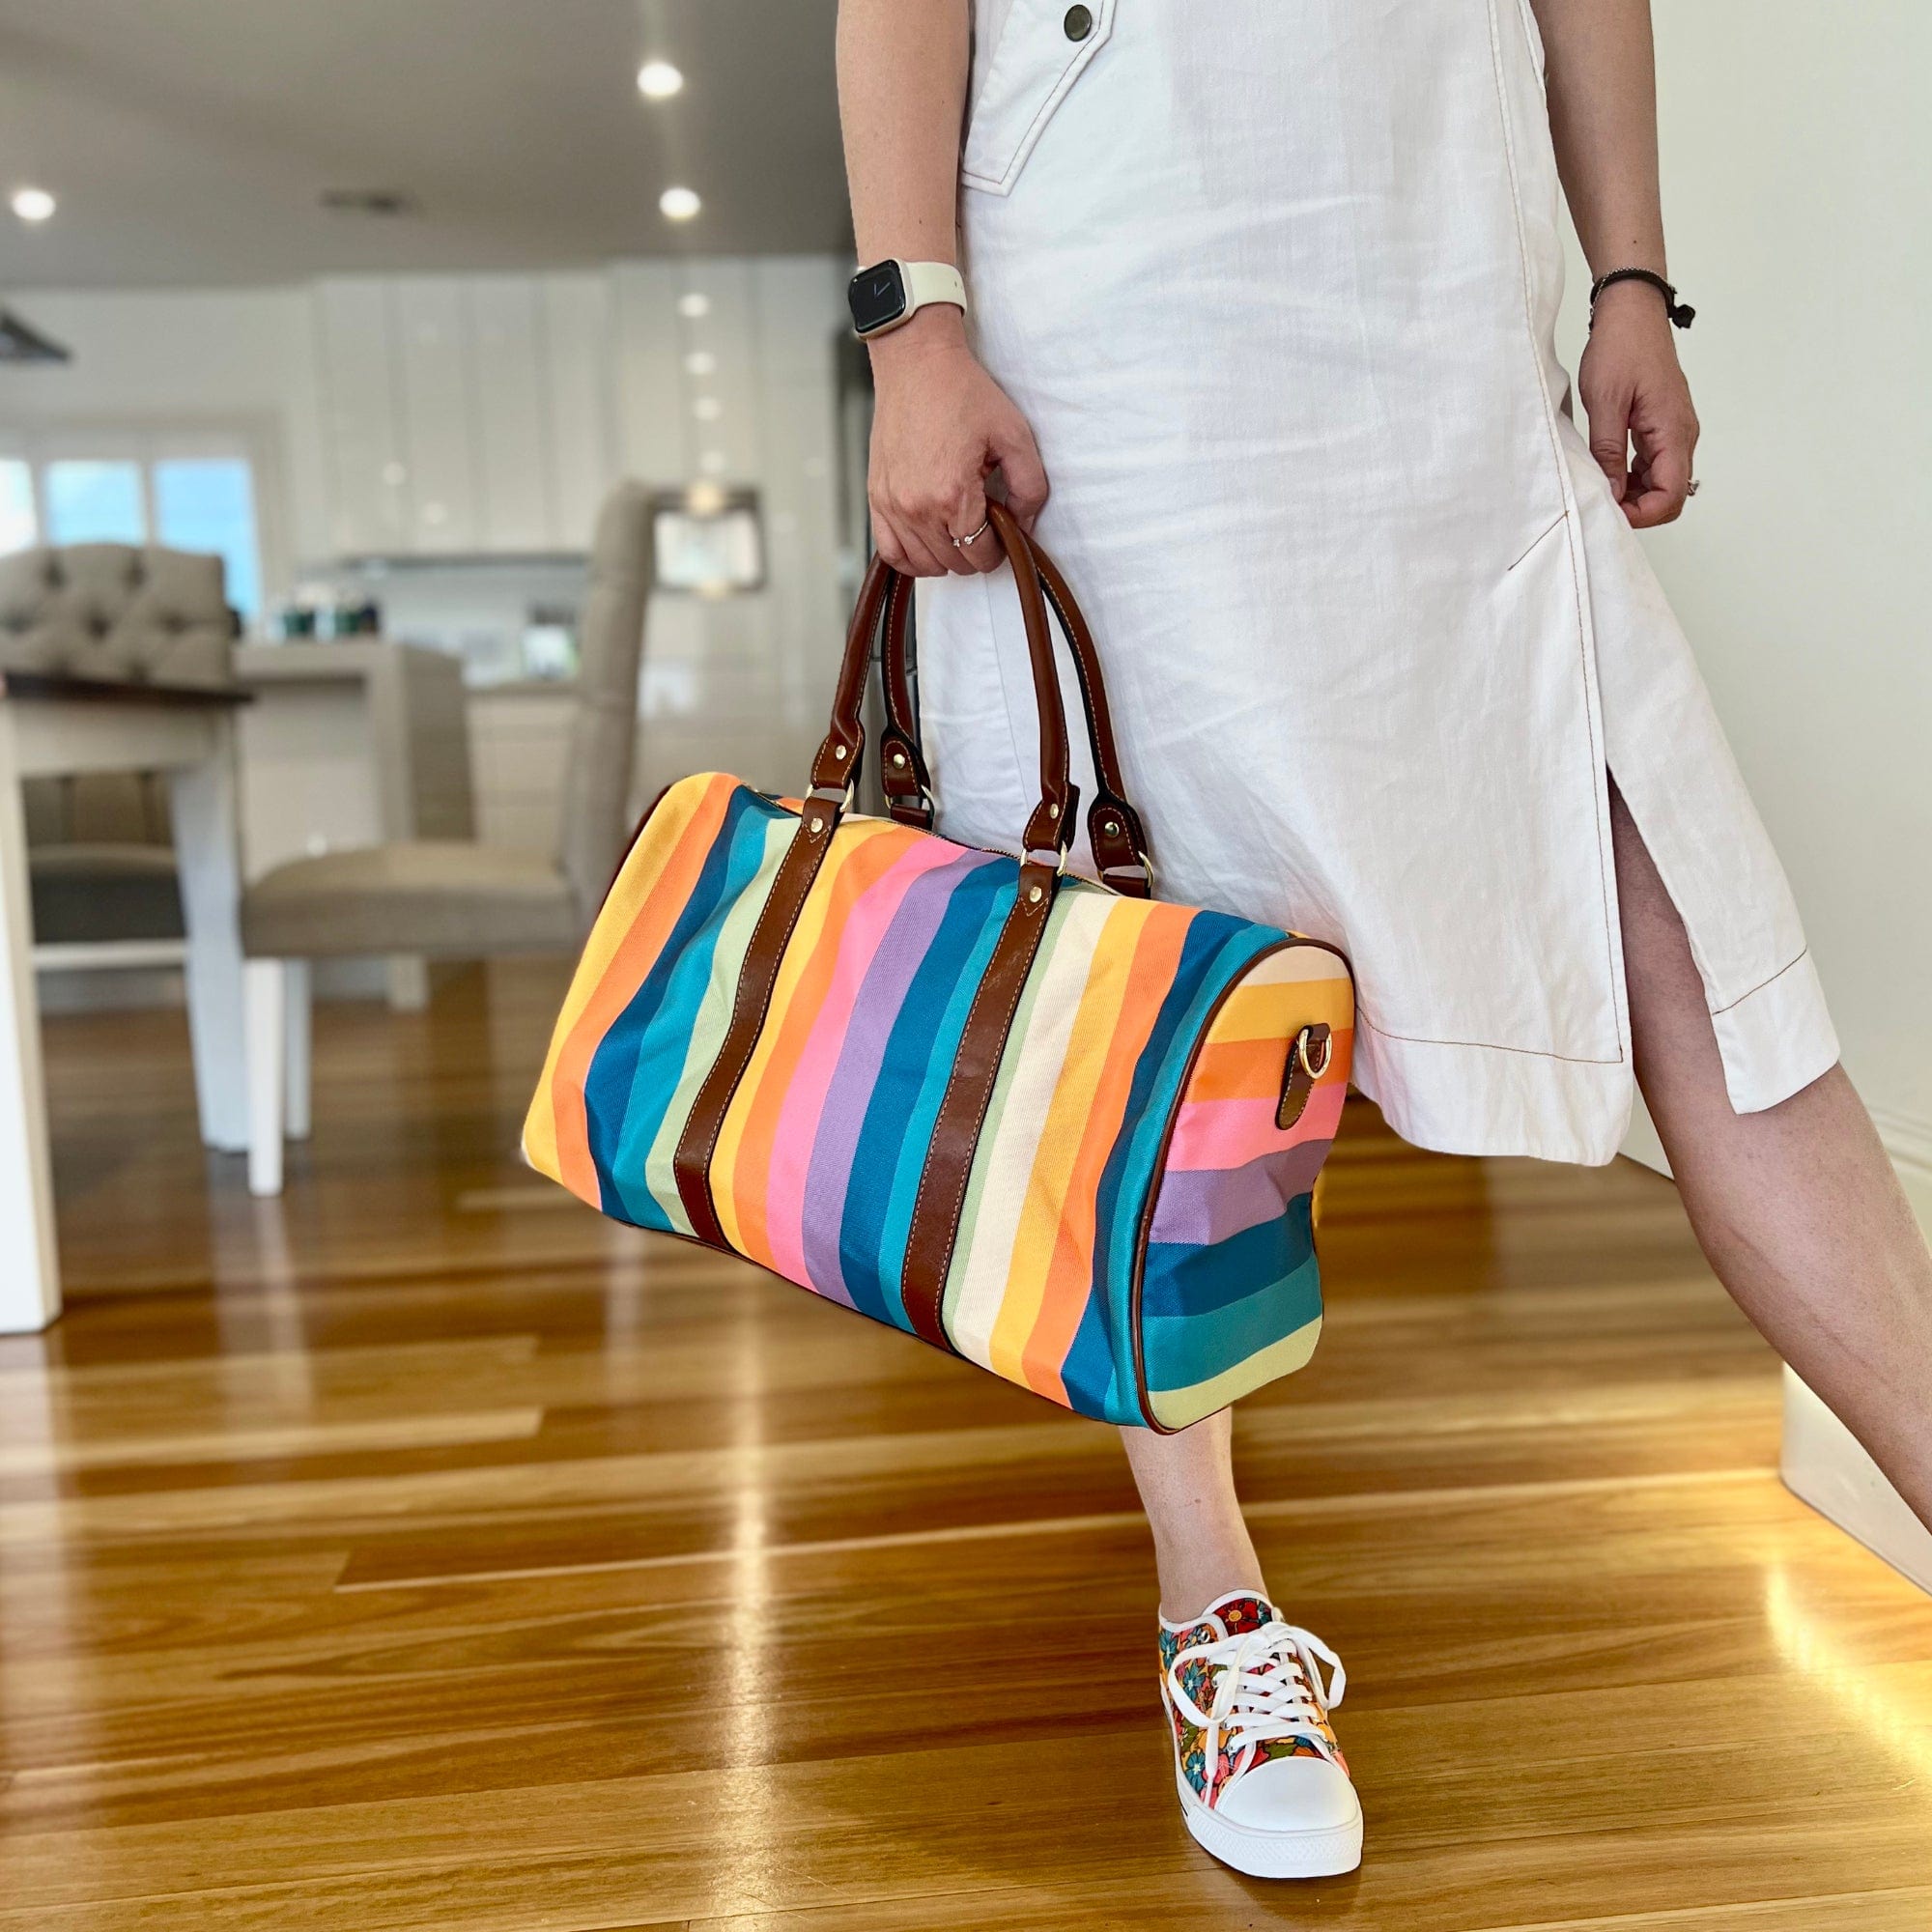 Vertical Rainbow Travel Duffle Bag